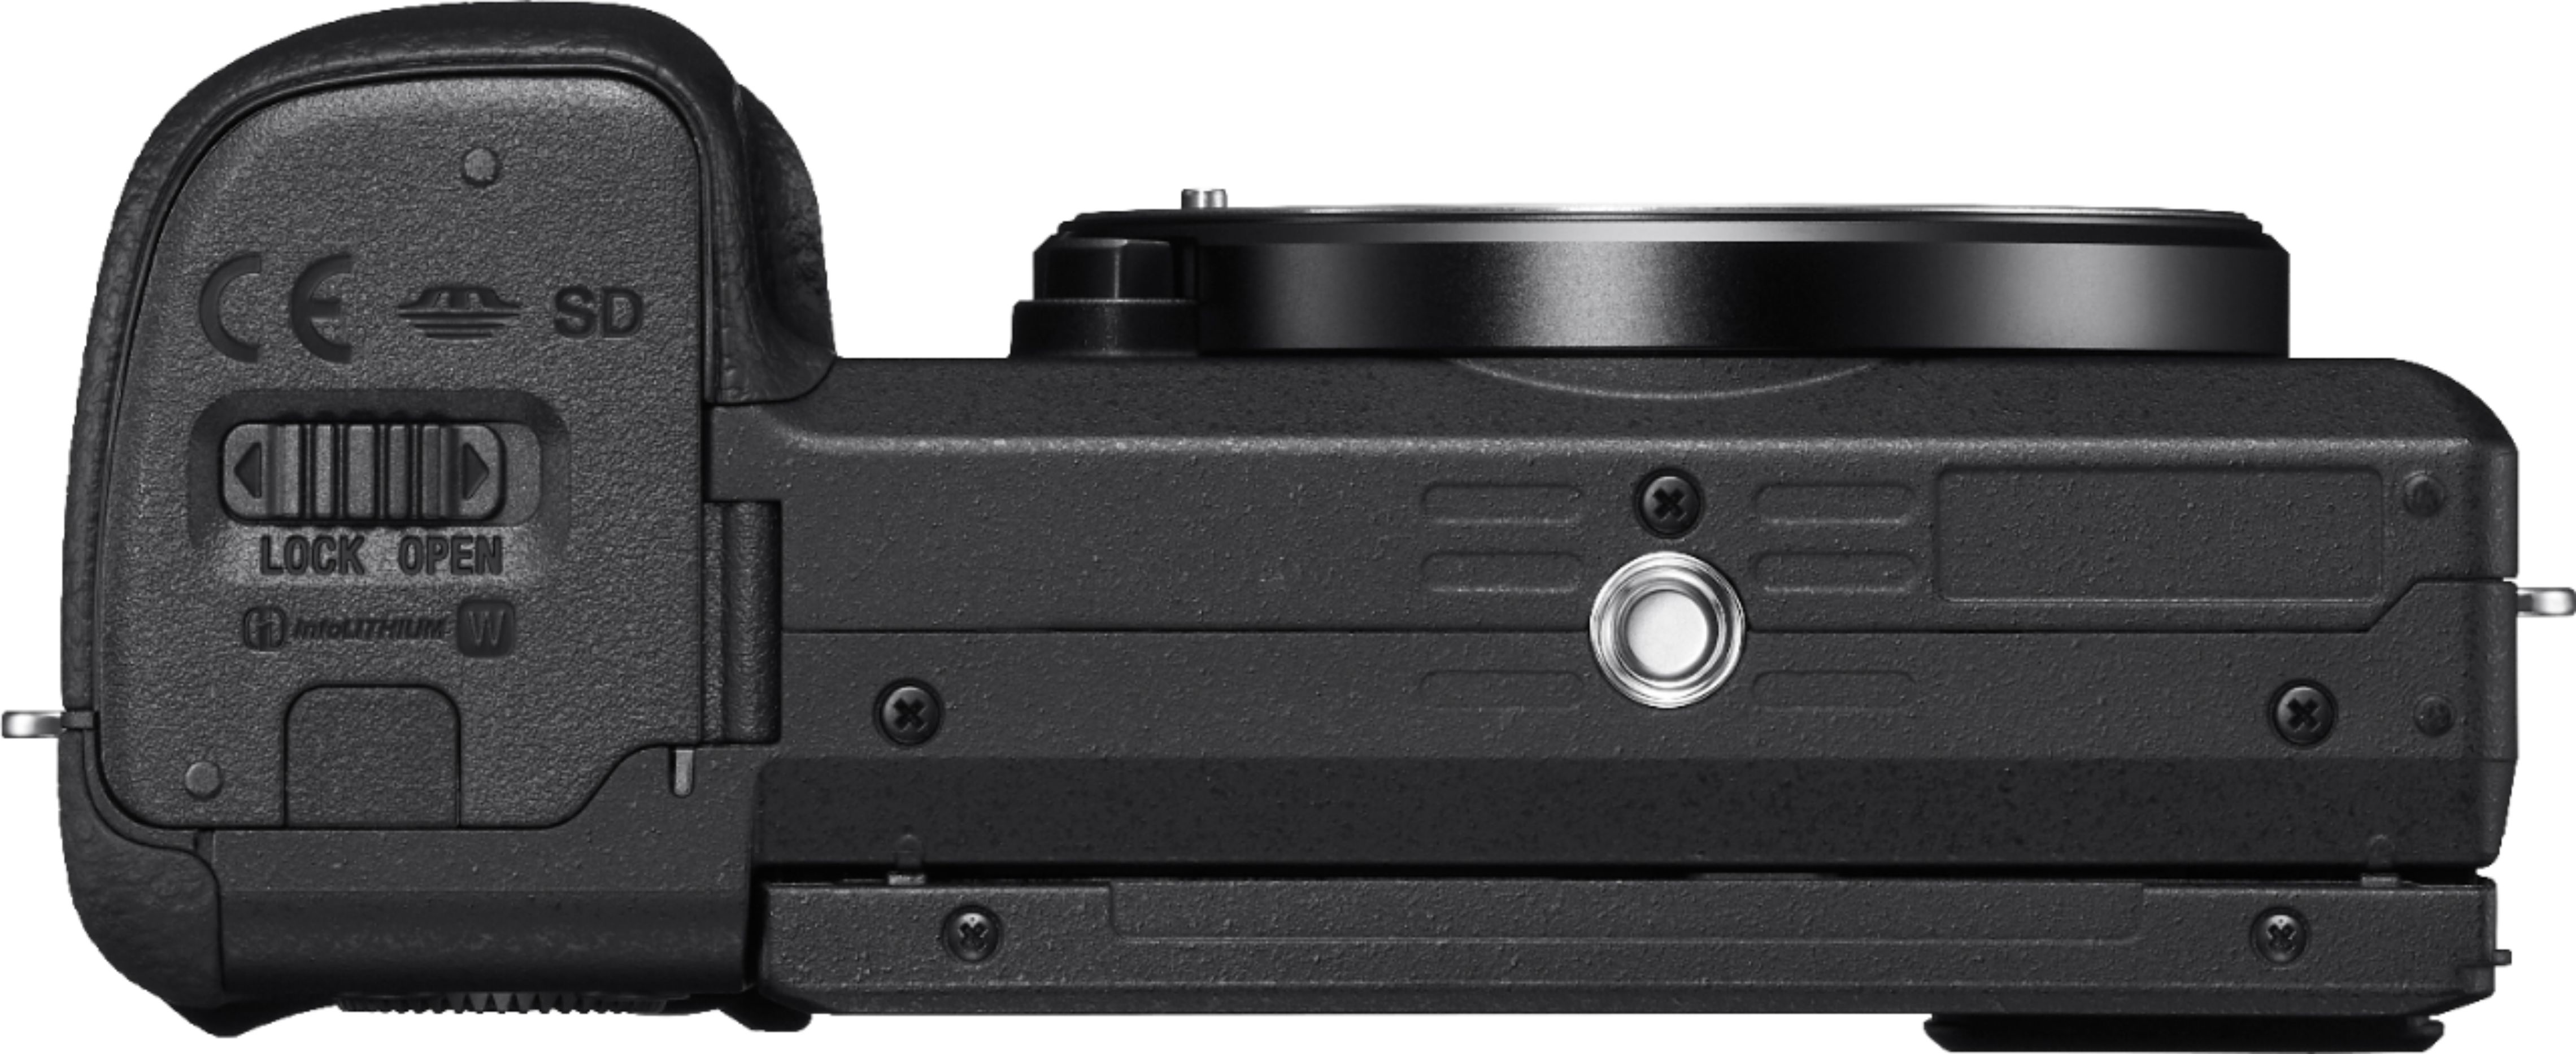 Sony A6400 Cuerpo - Comprar ILCE6400B - ALPHA 6400